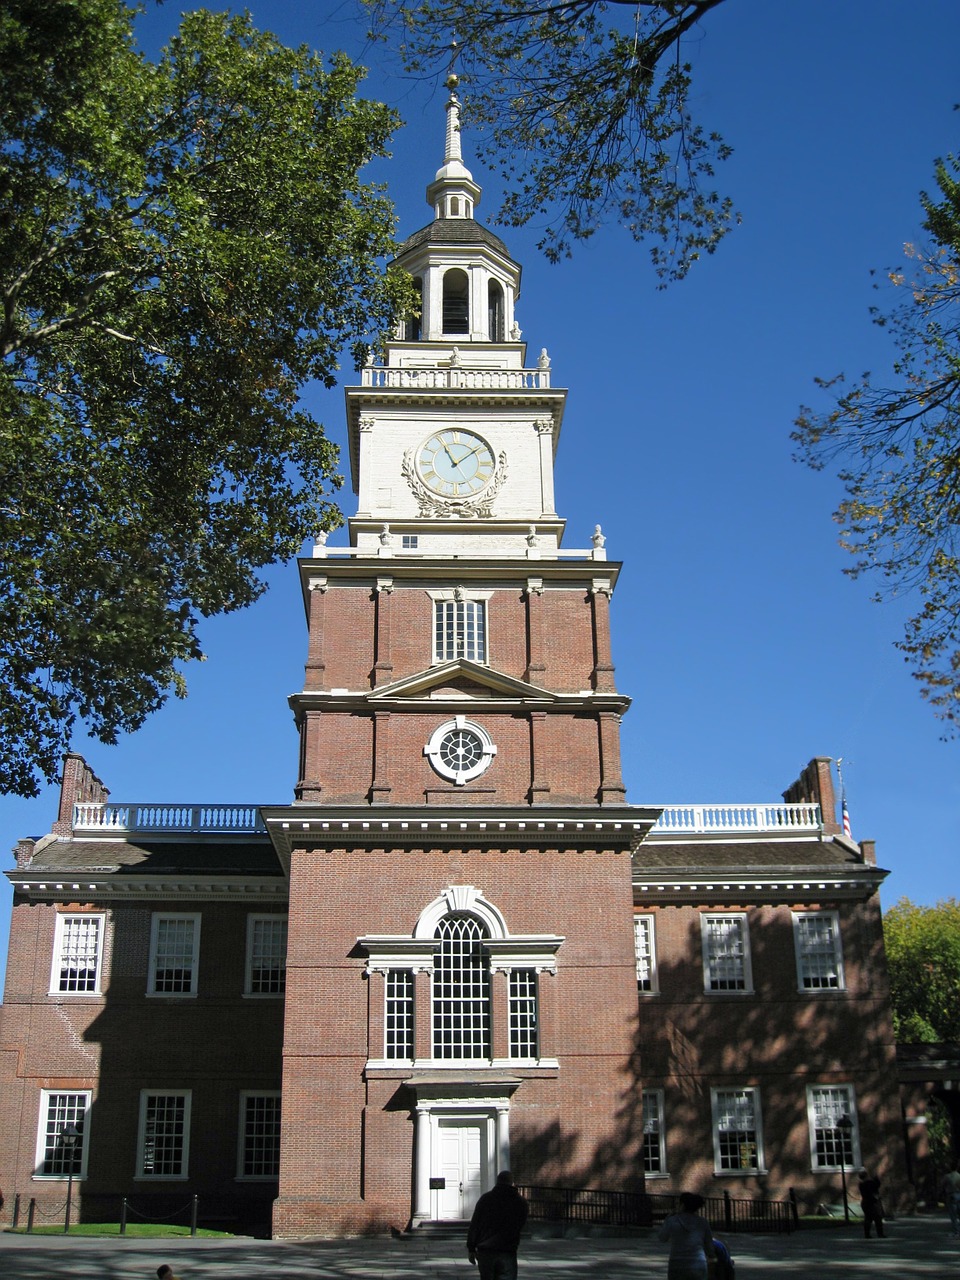 Image of Independence Hall in Philadelphia, Pennsylvania